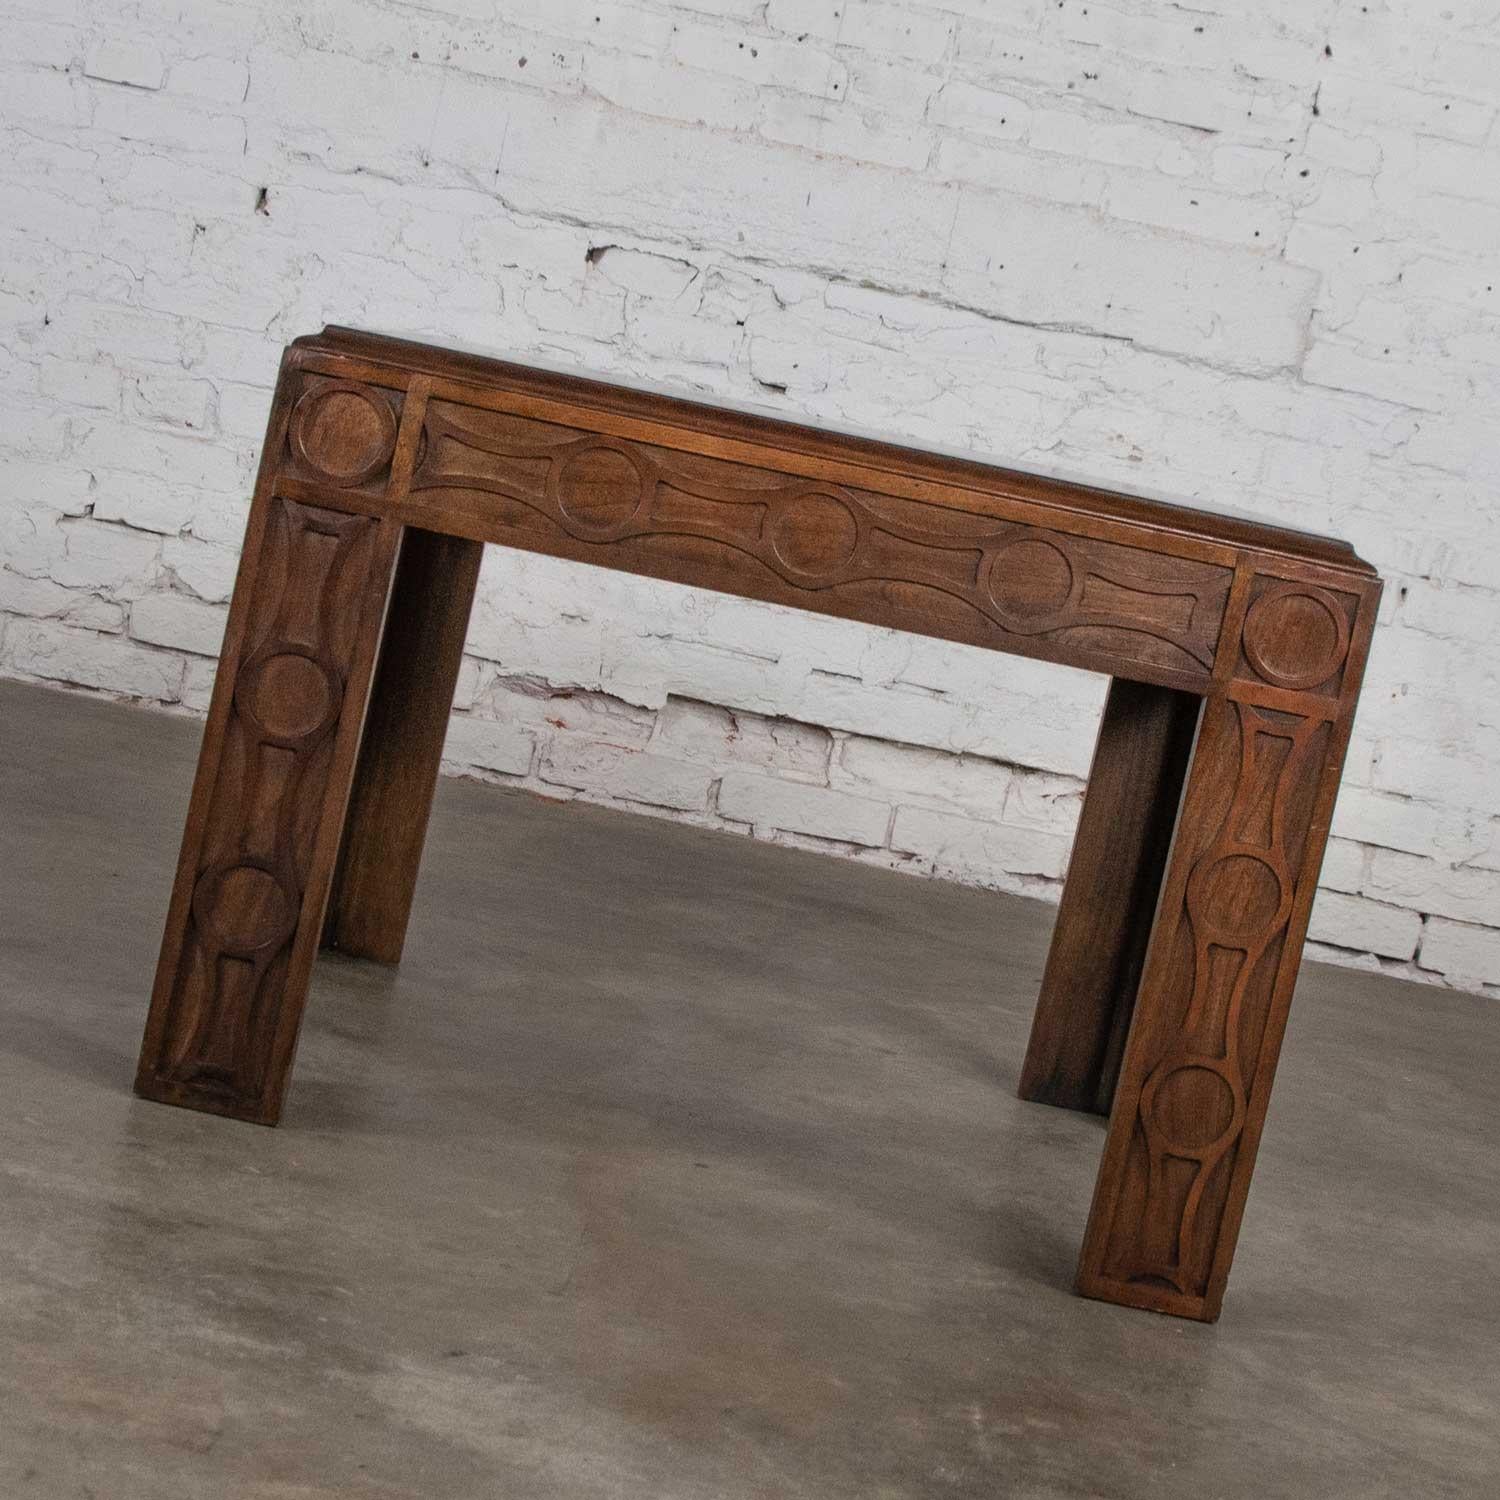 Vintage Modern Square Lane End Side Table Carved Leg Design & Chevron Veneer In Good Condition For Sale In Topeka, KS